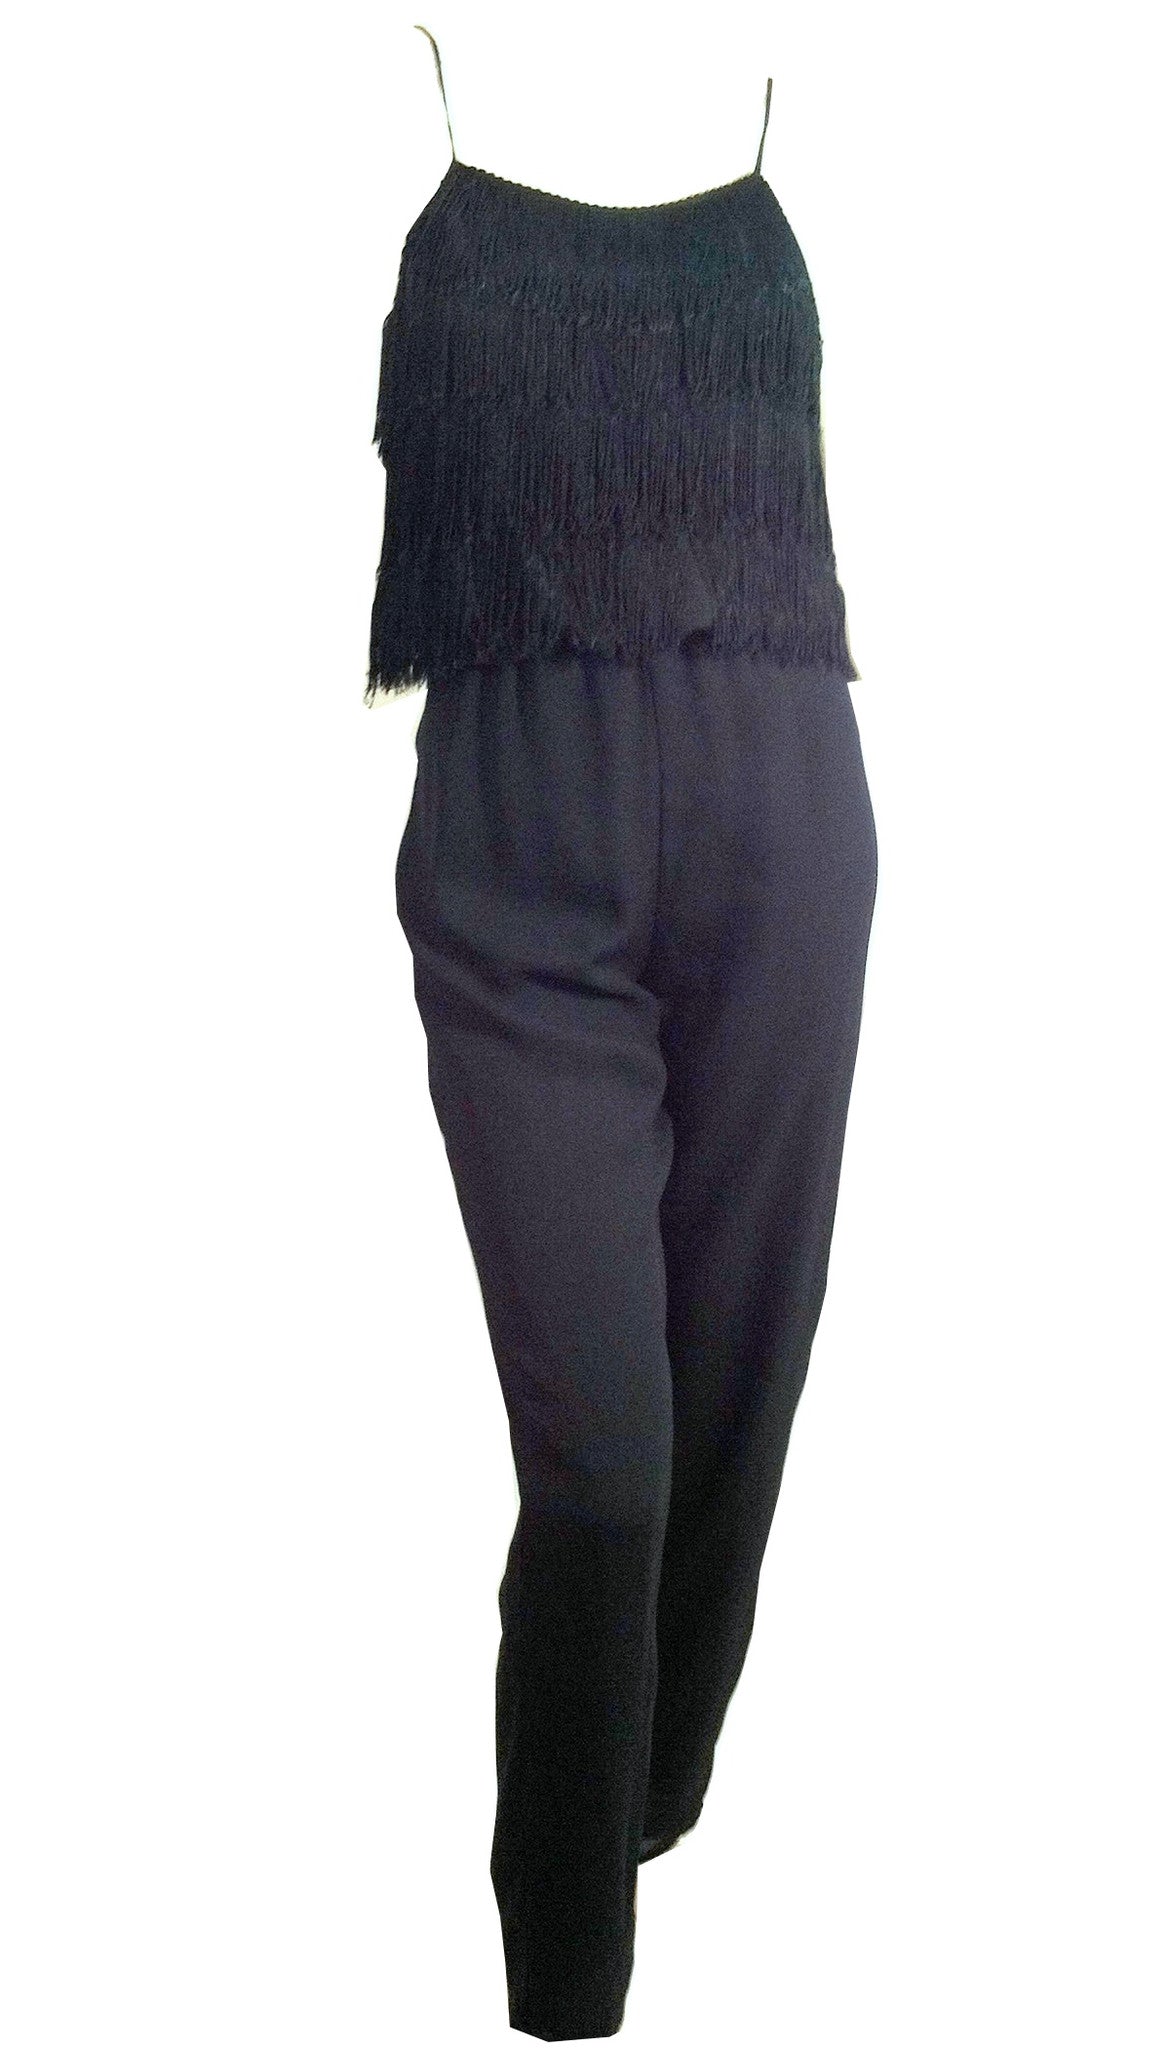 Disco Black Fringed Bodice Pantsuit w/ Spaghetti Straps circa 1980s Dorothea's Closet Vintage Clothing